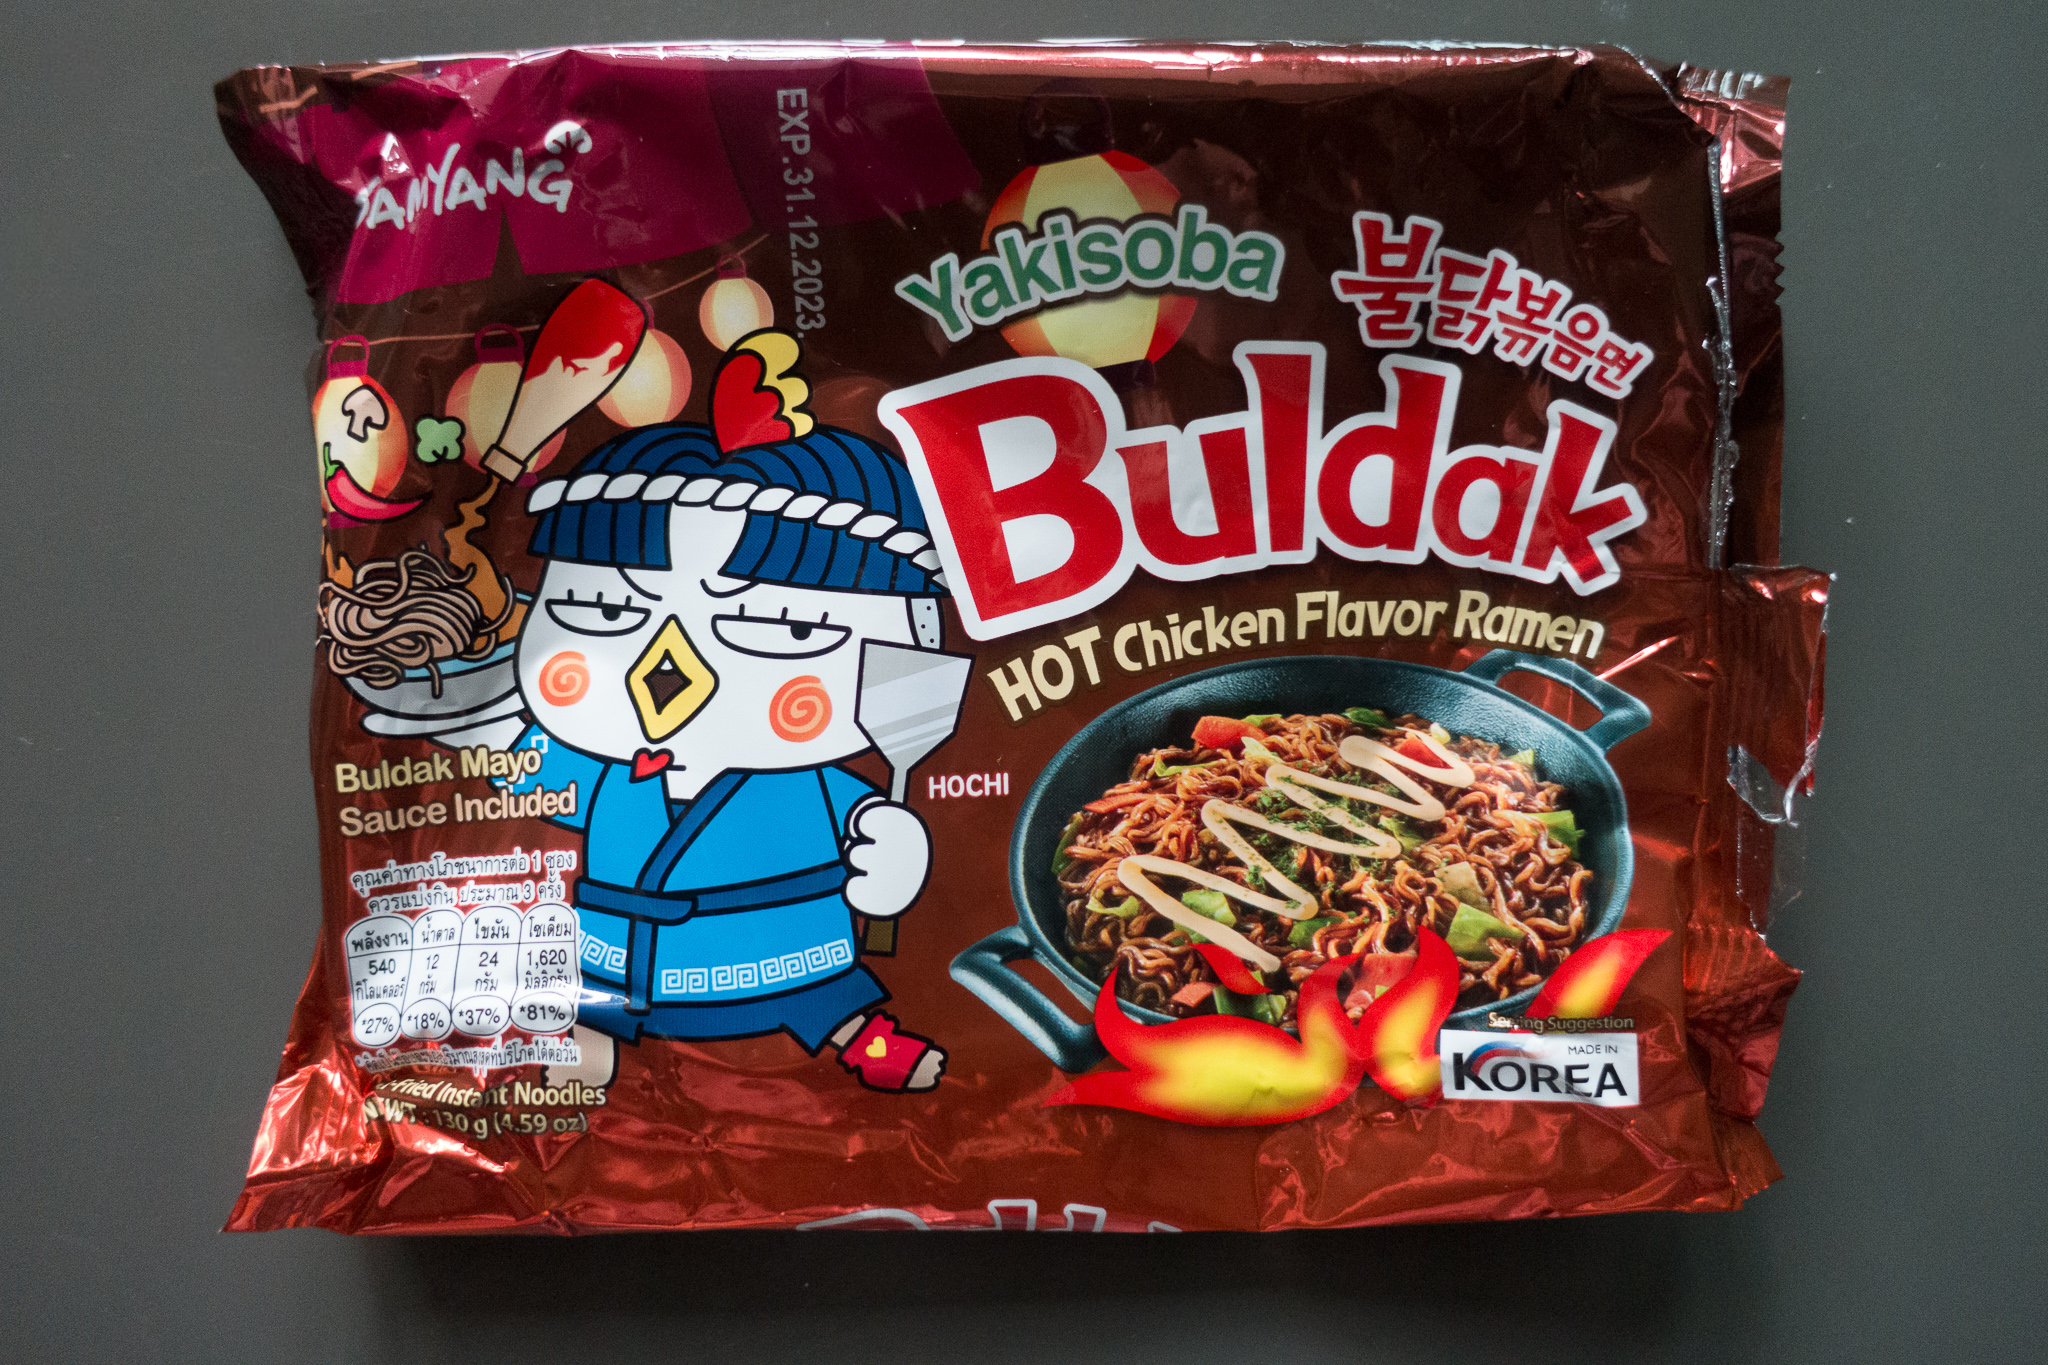 Yakisoba Buldak Hot Chicken Flavor Ramen - IMARAIV